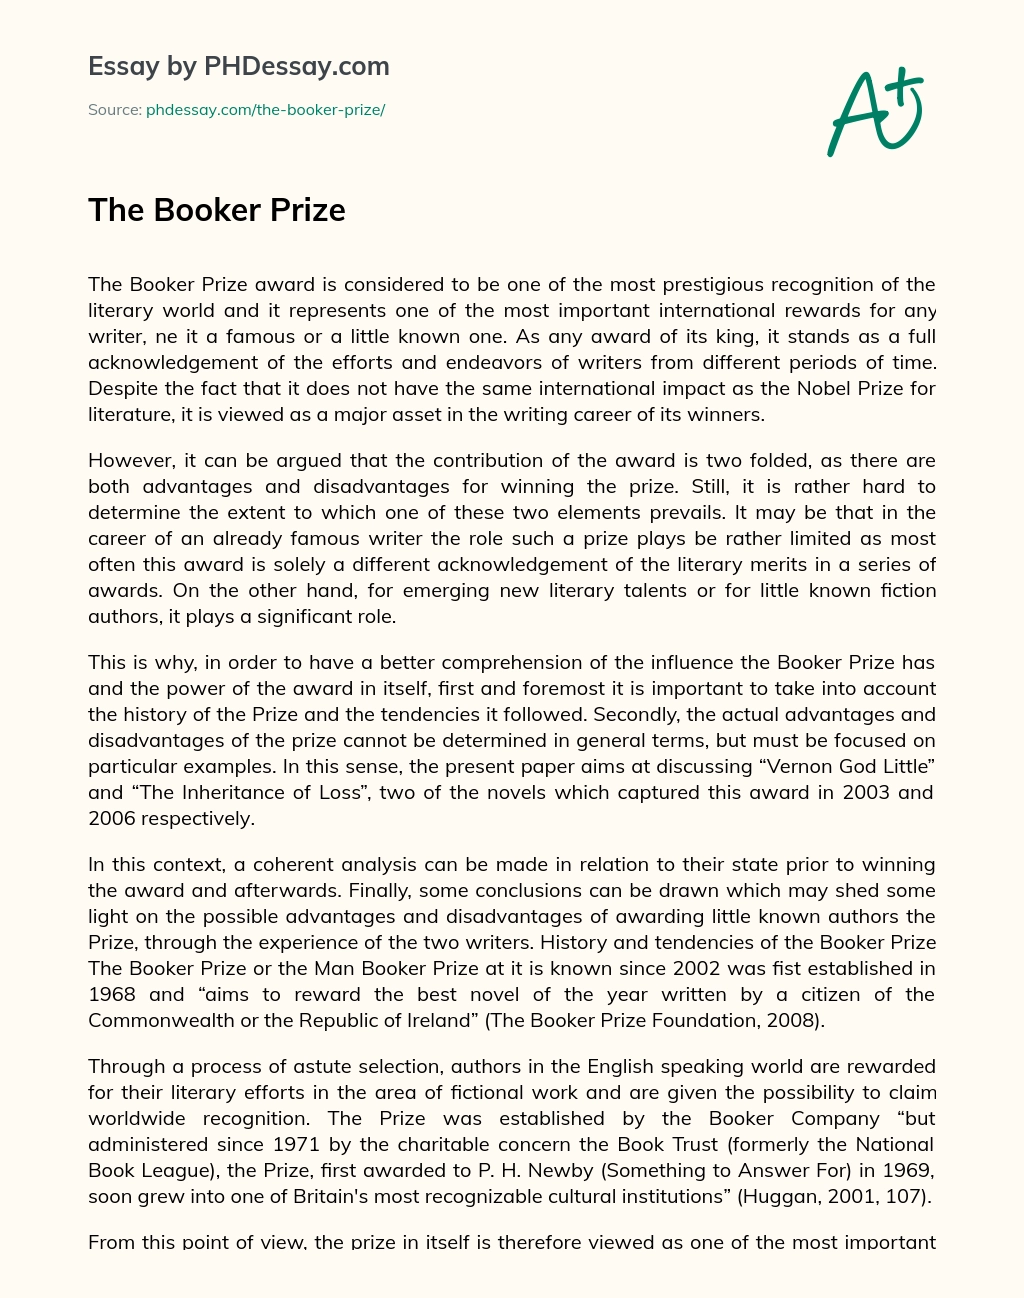 The Booker Prize essay